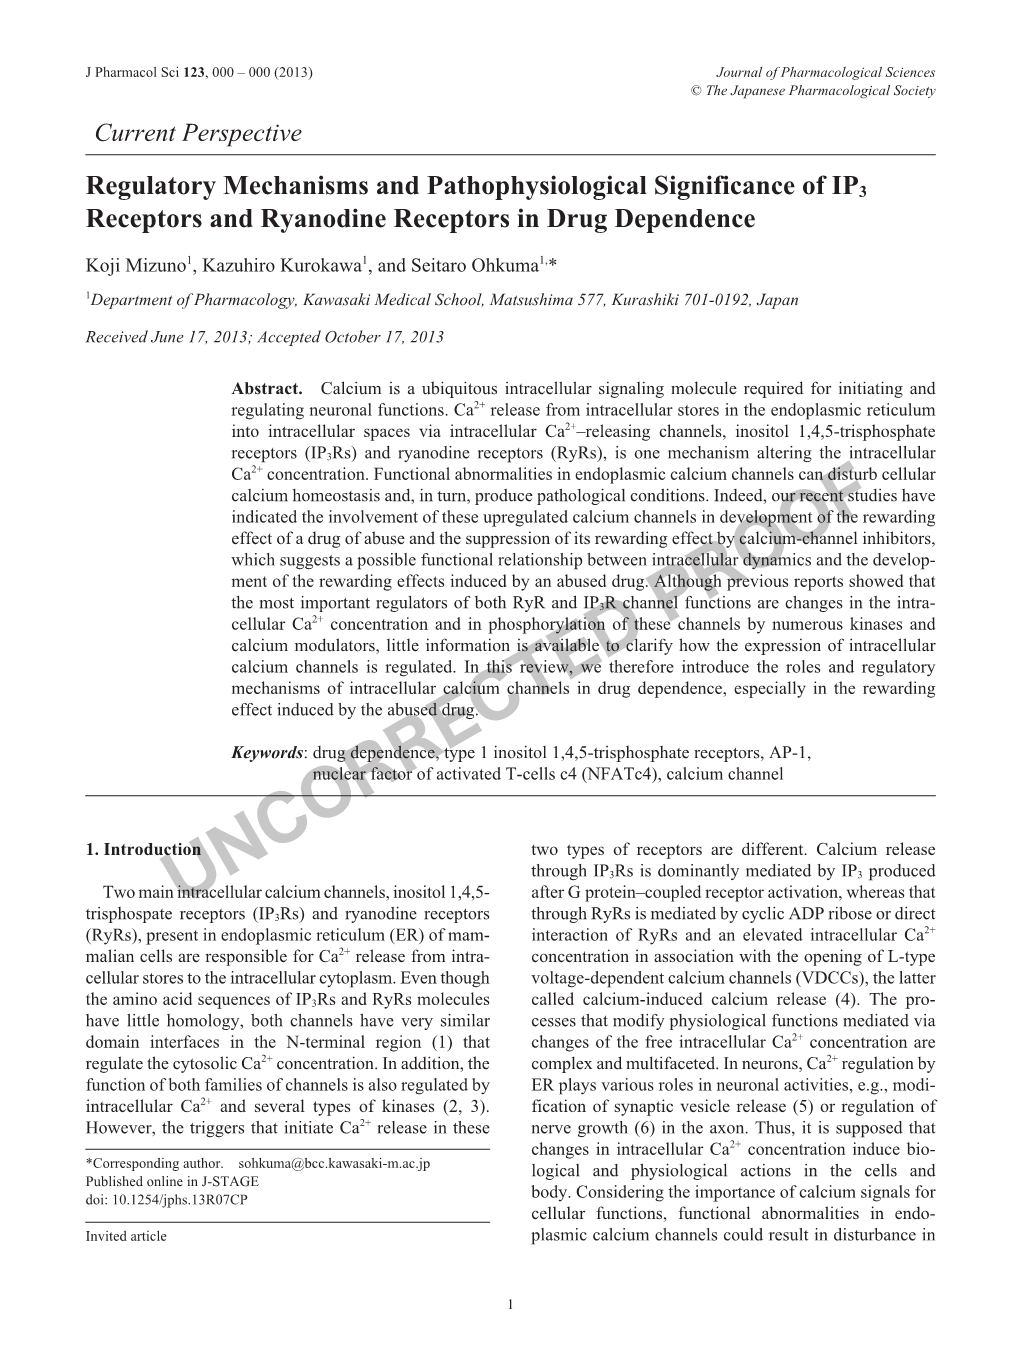 Regulatory Mechanisms and Pathophysiological Significance of IP3 Receptors and Ryanodine Receptors in Drug Dependence